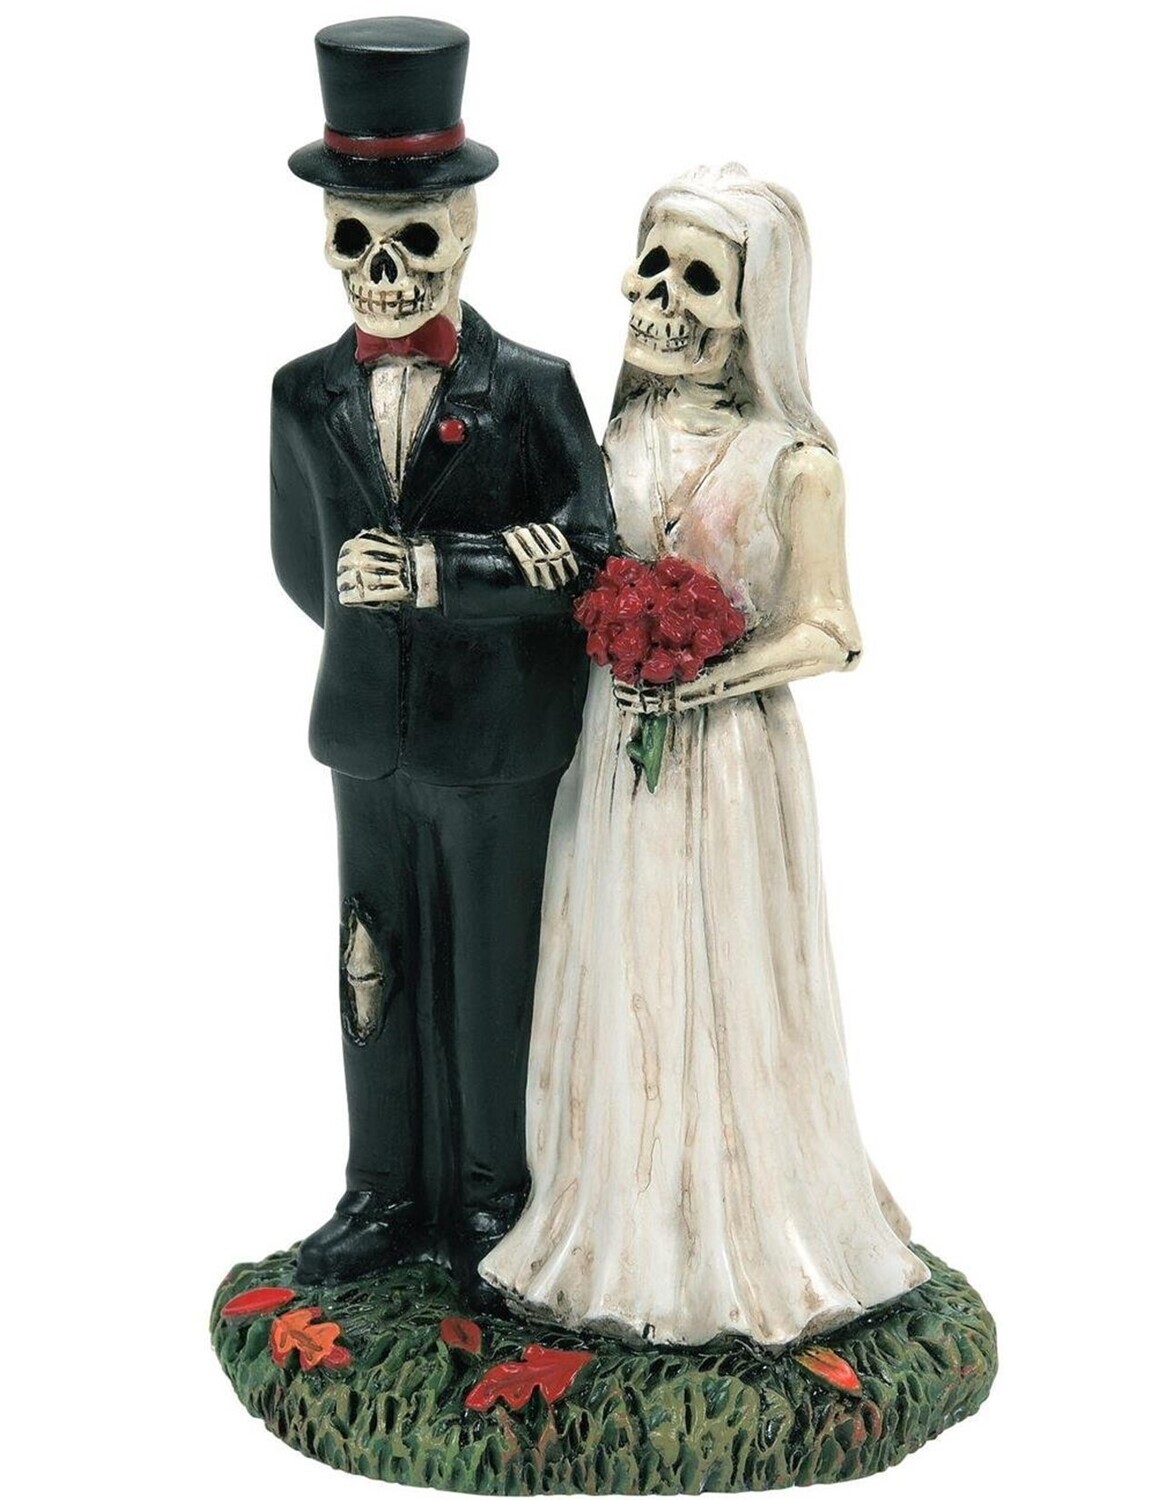 Department 56 Halloween Snow Village "Matriboney" Skeleton Wedding Couple Figurine (6012283)